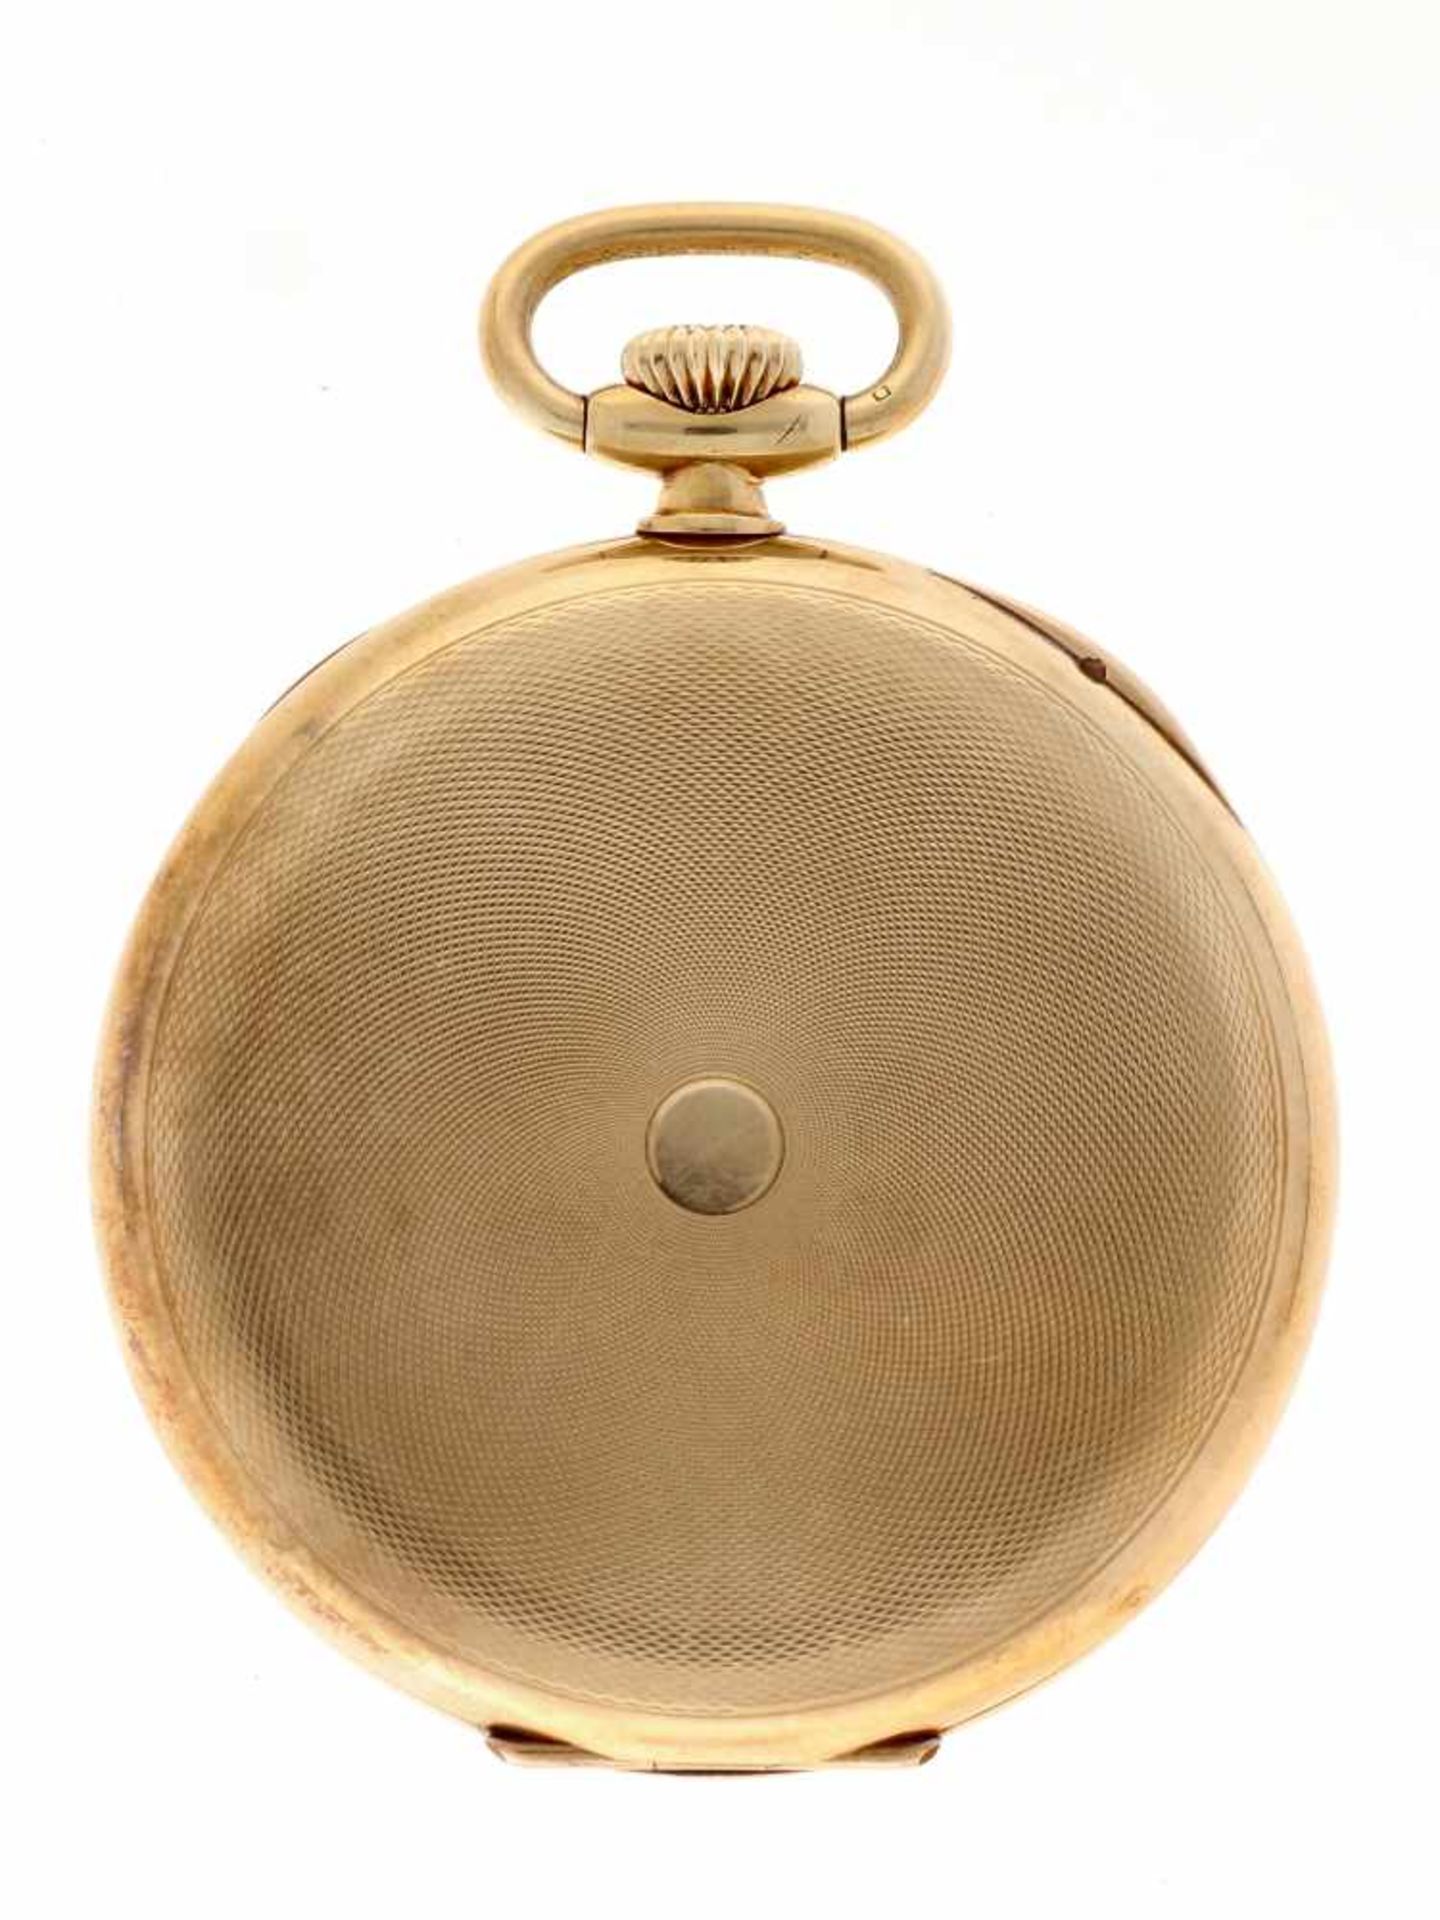 Pocket watch Zenith gold - Men's pocket watch - Manual winding - Ca. 1901. - Bild 2 aus 5